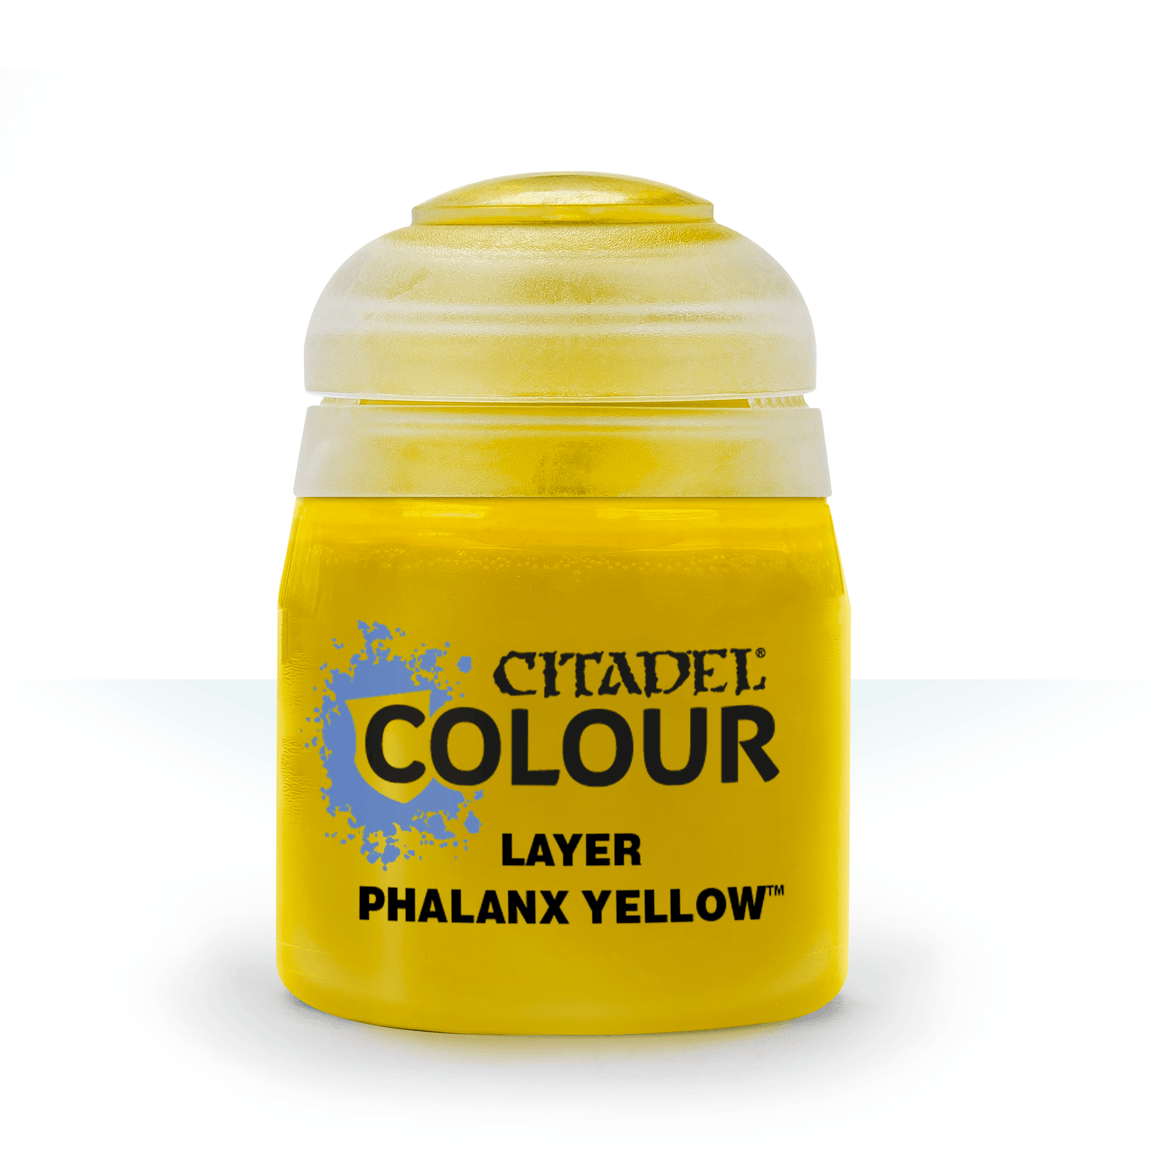 Citadel Layer Paint Phalanx Yellow